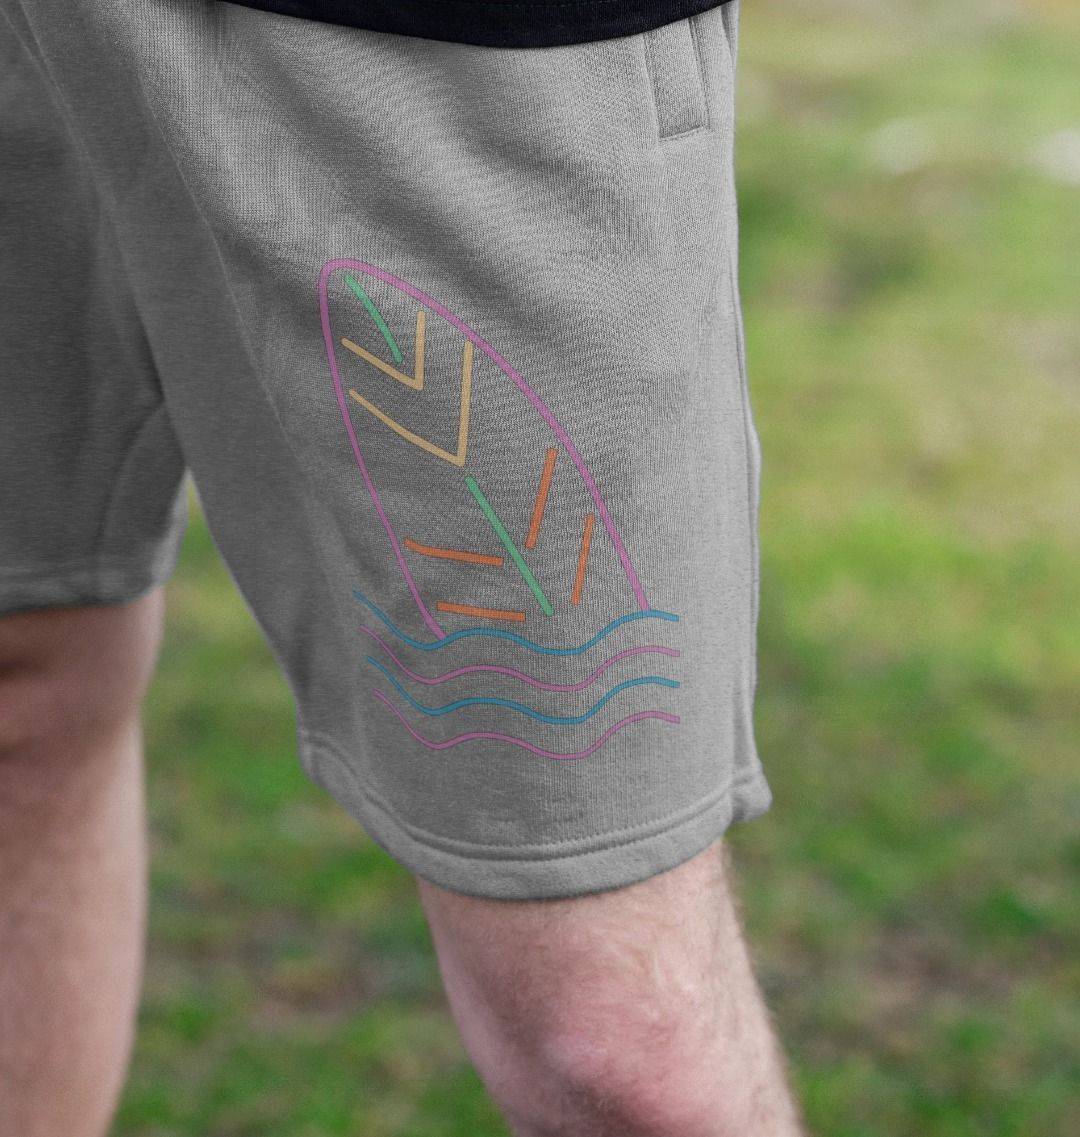 Men's Surfs Up Organic Shorts